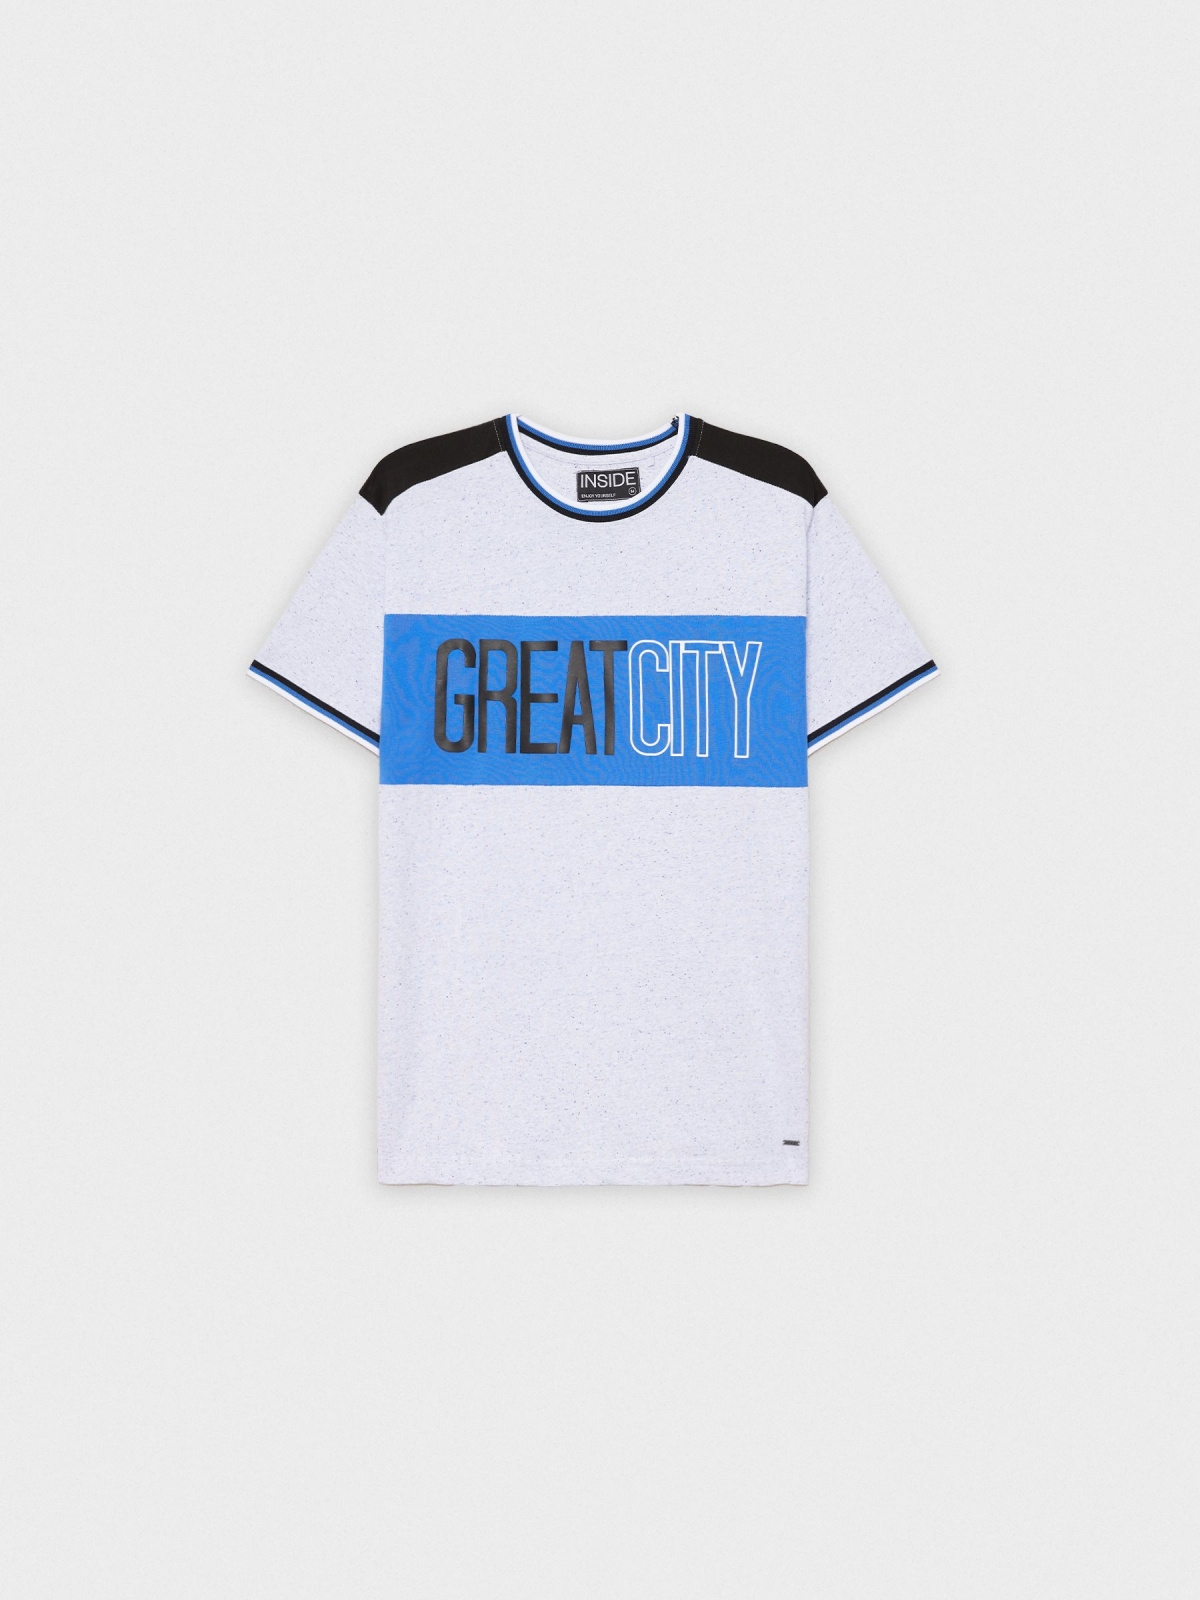  T-shirt Greatcity branco